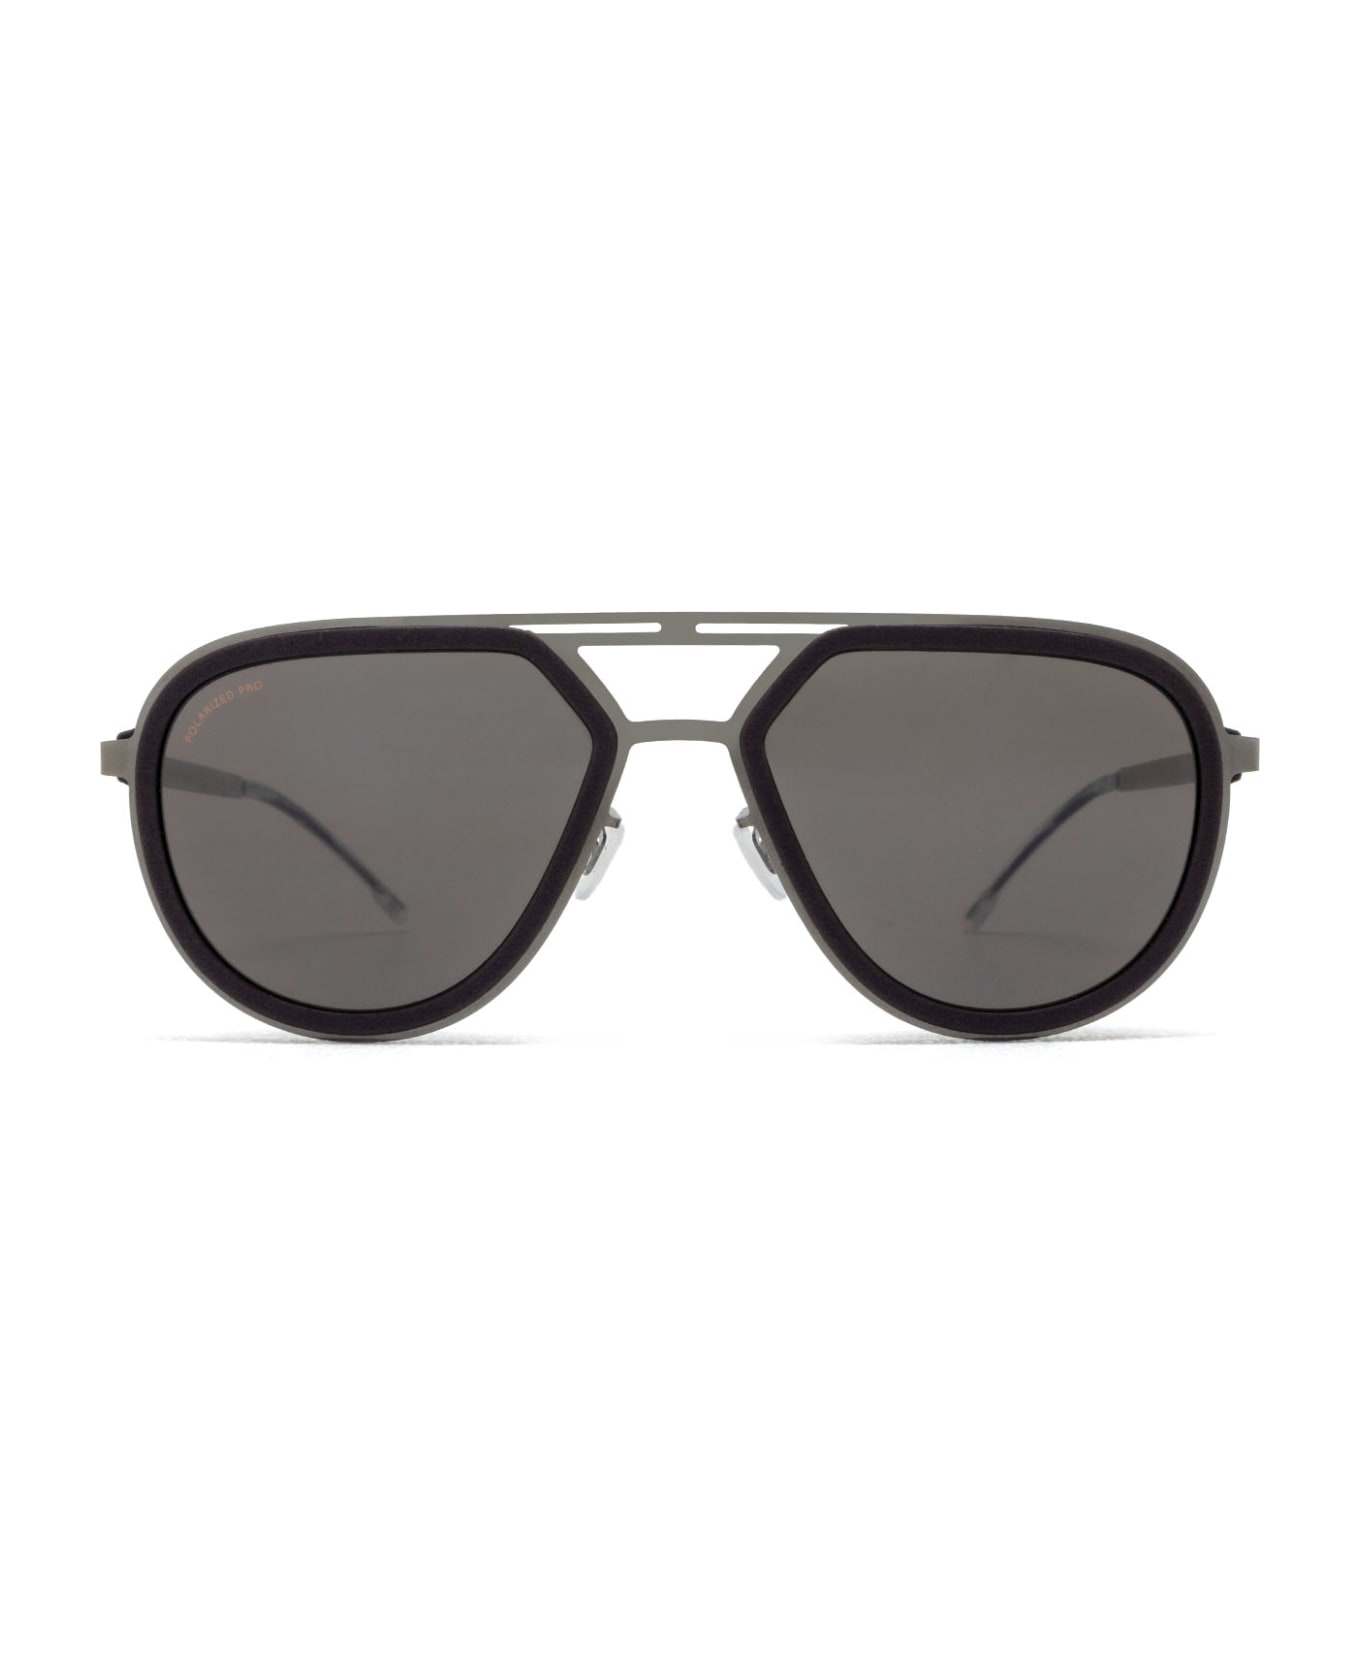 Mykita Cypress Sun Mh60-slate Grey/shiny Graphite Sunglasses - MH60-Slate Grey/Shiny Graphite